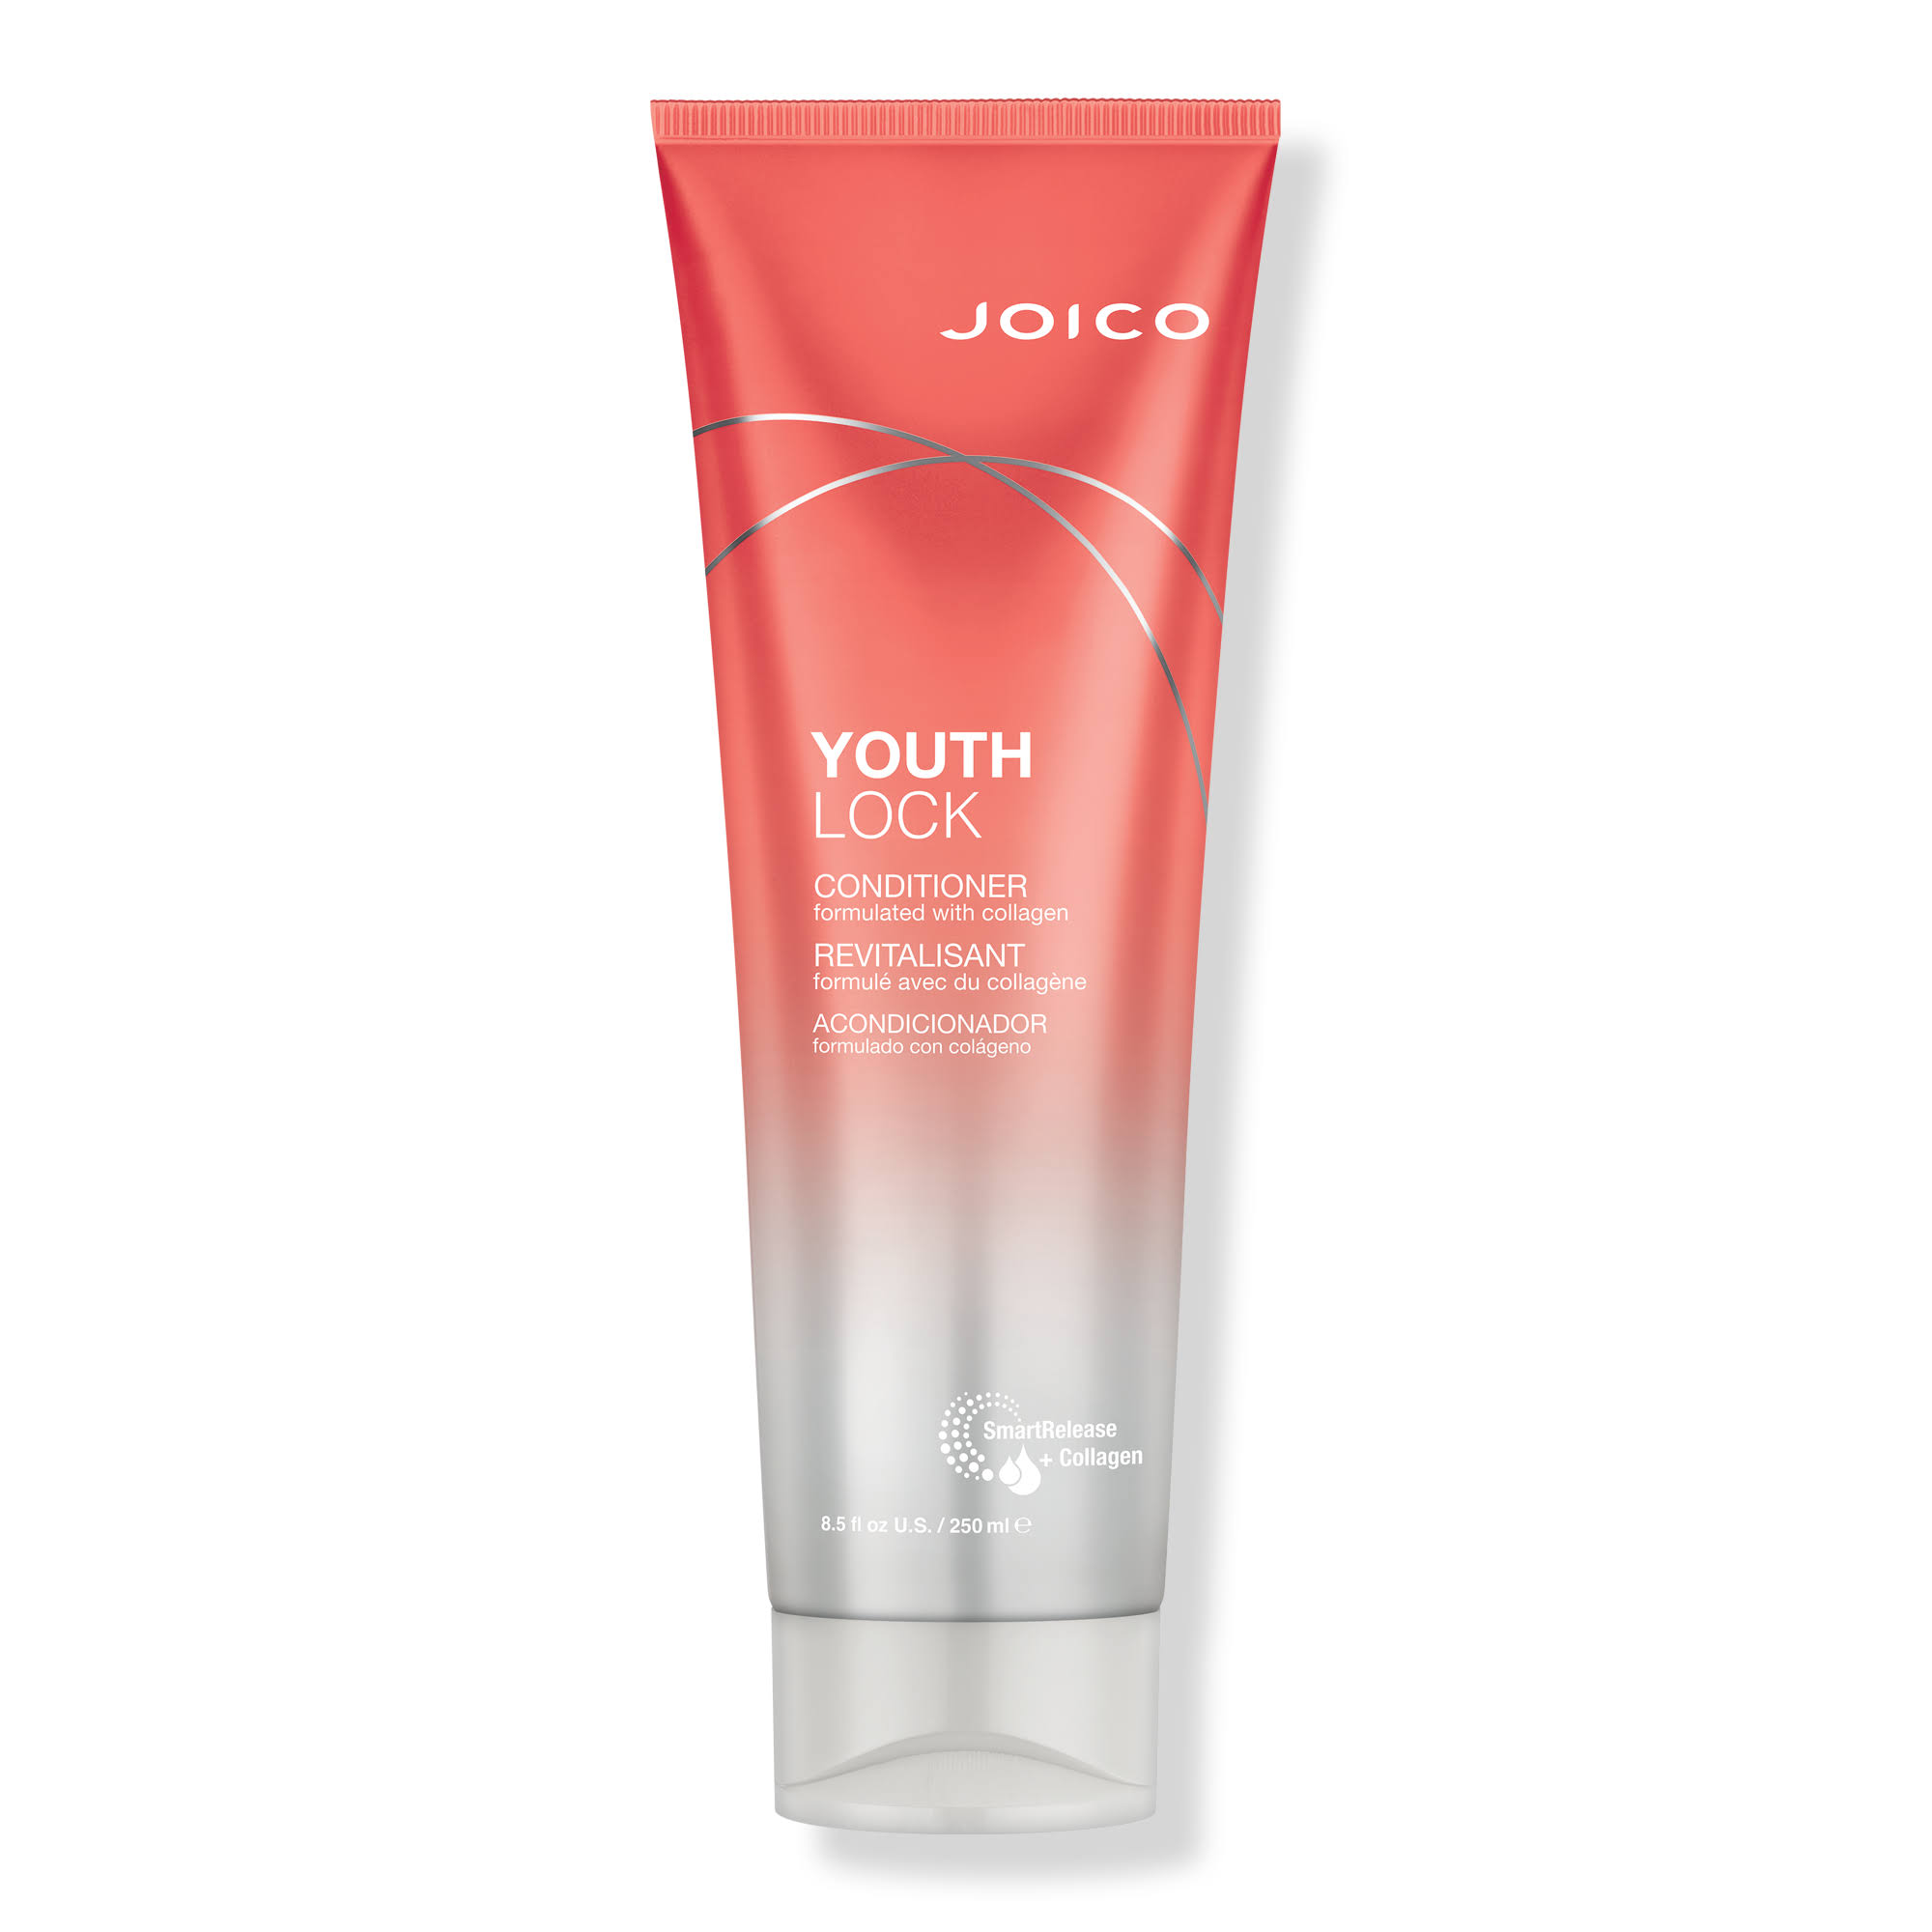 Joico Youthlock Conditioner - 8.5 oz